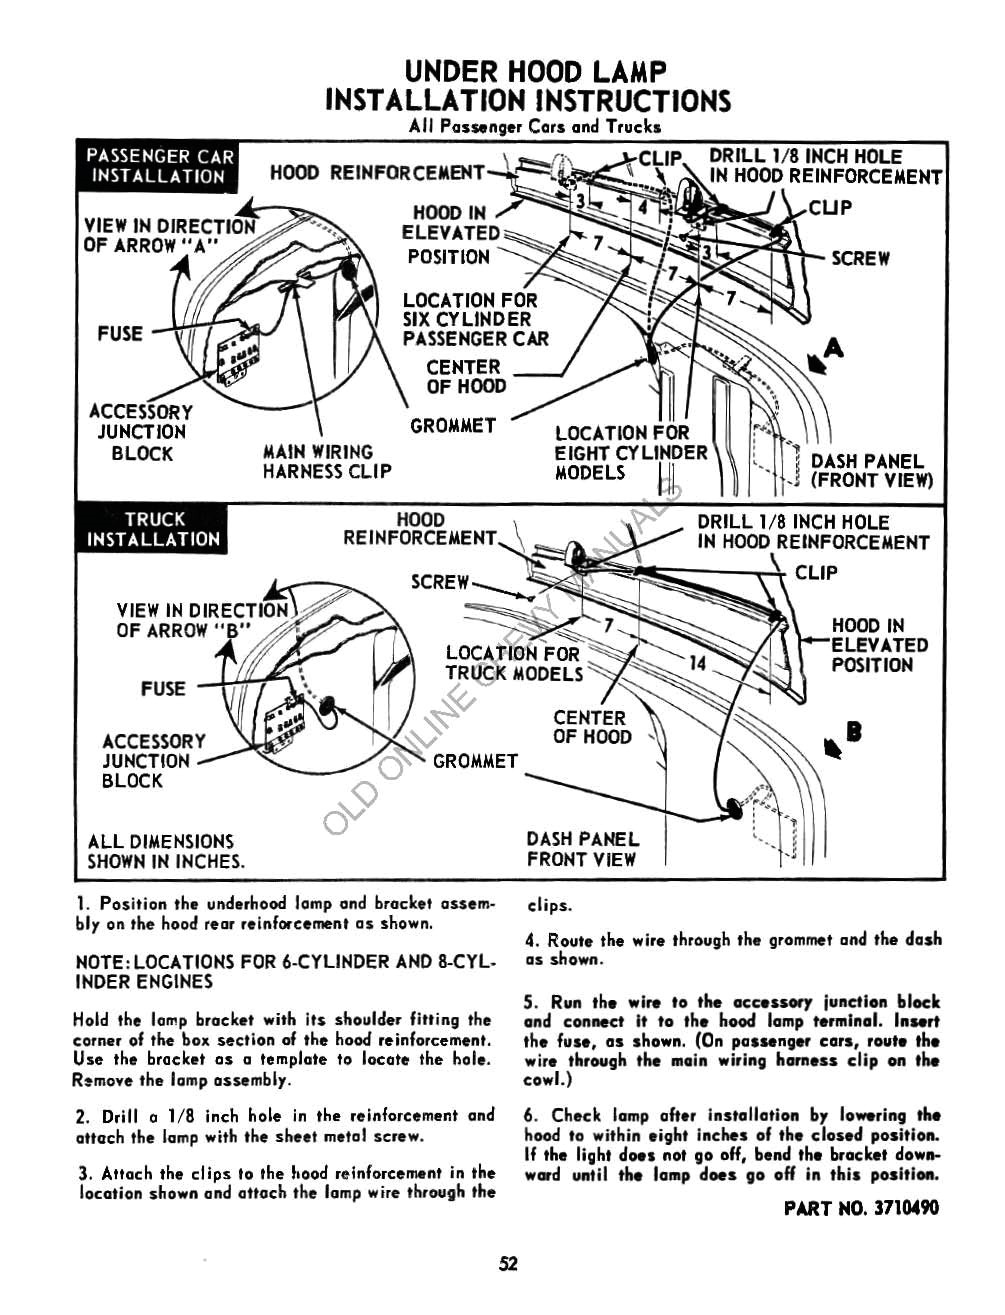 1955_Chevrolet_Acc_Manual-52